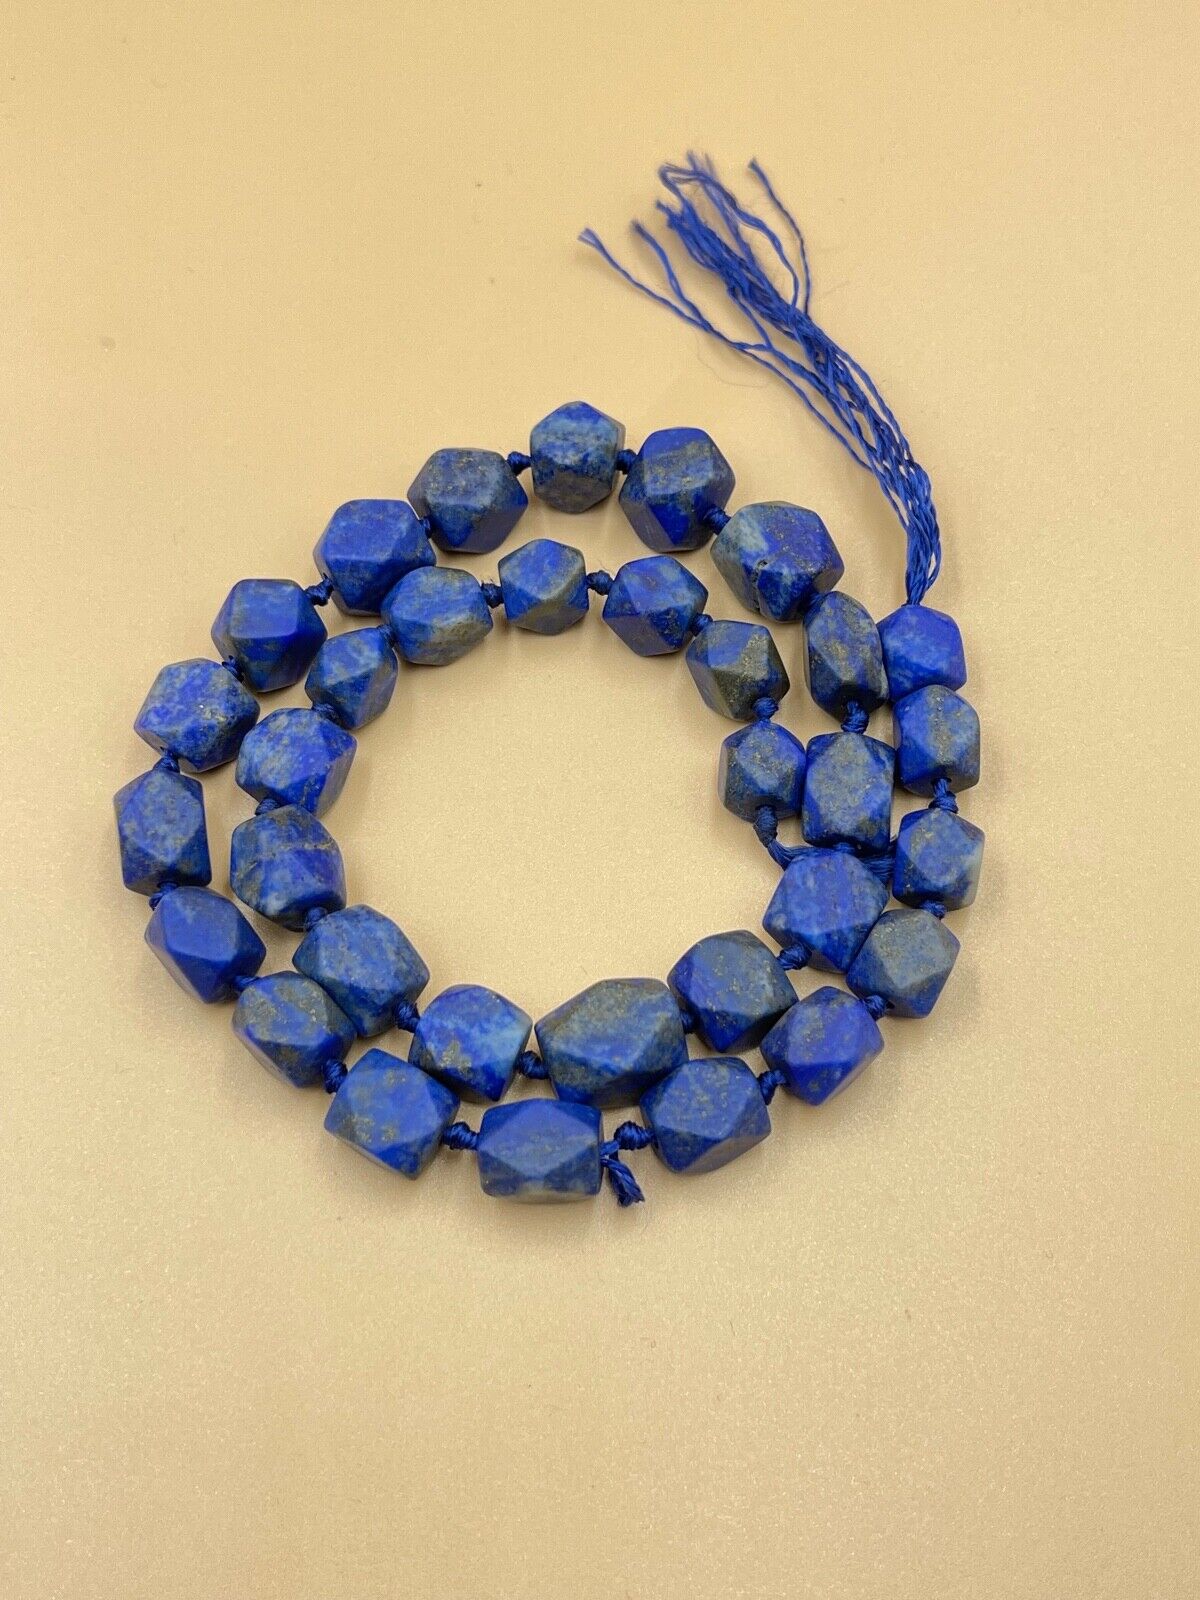 Natural Genuine Beautiful Unpolished Old Near Eastern Natural Lapis Lazuli Beads